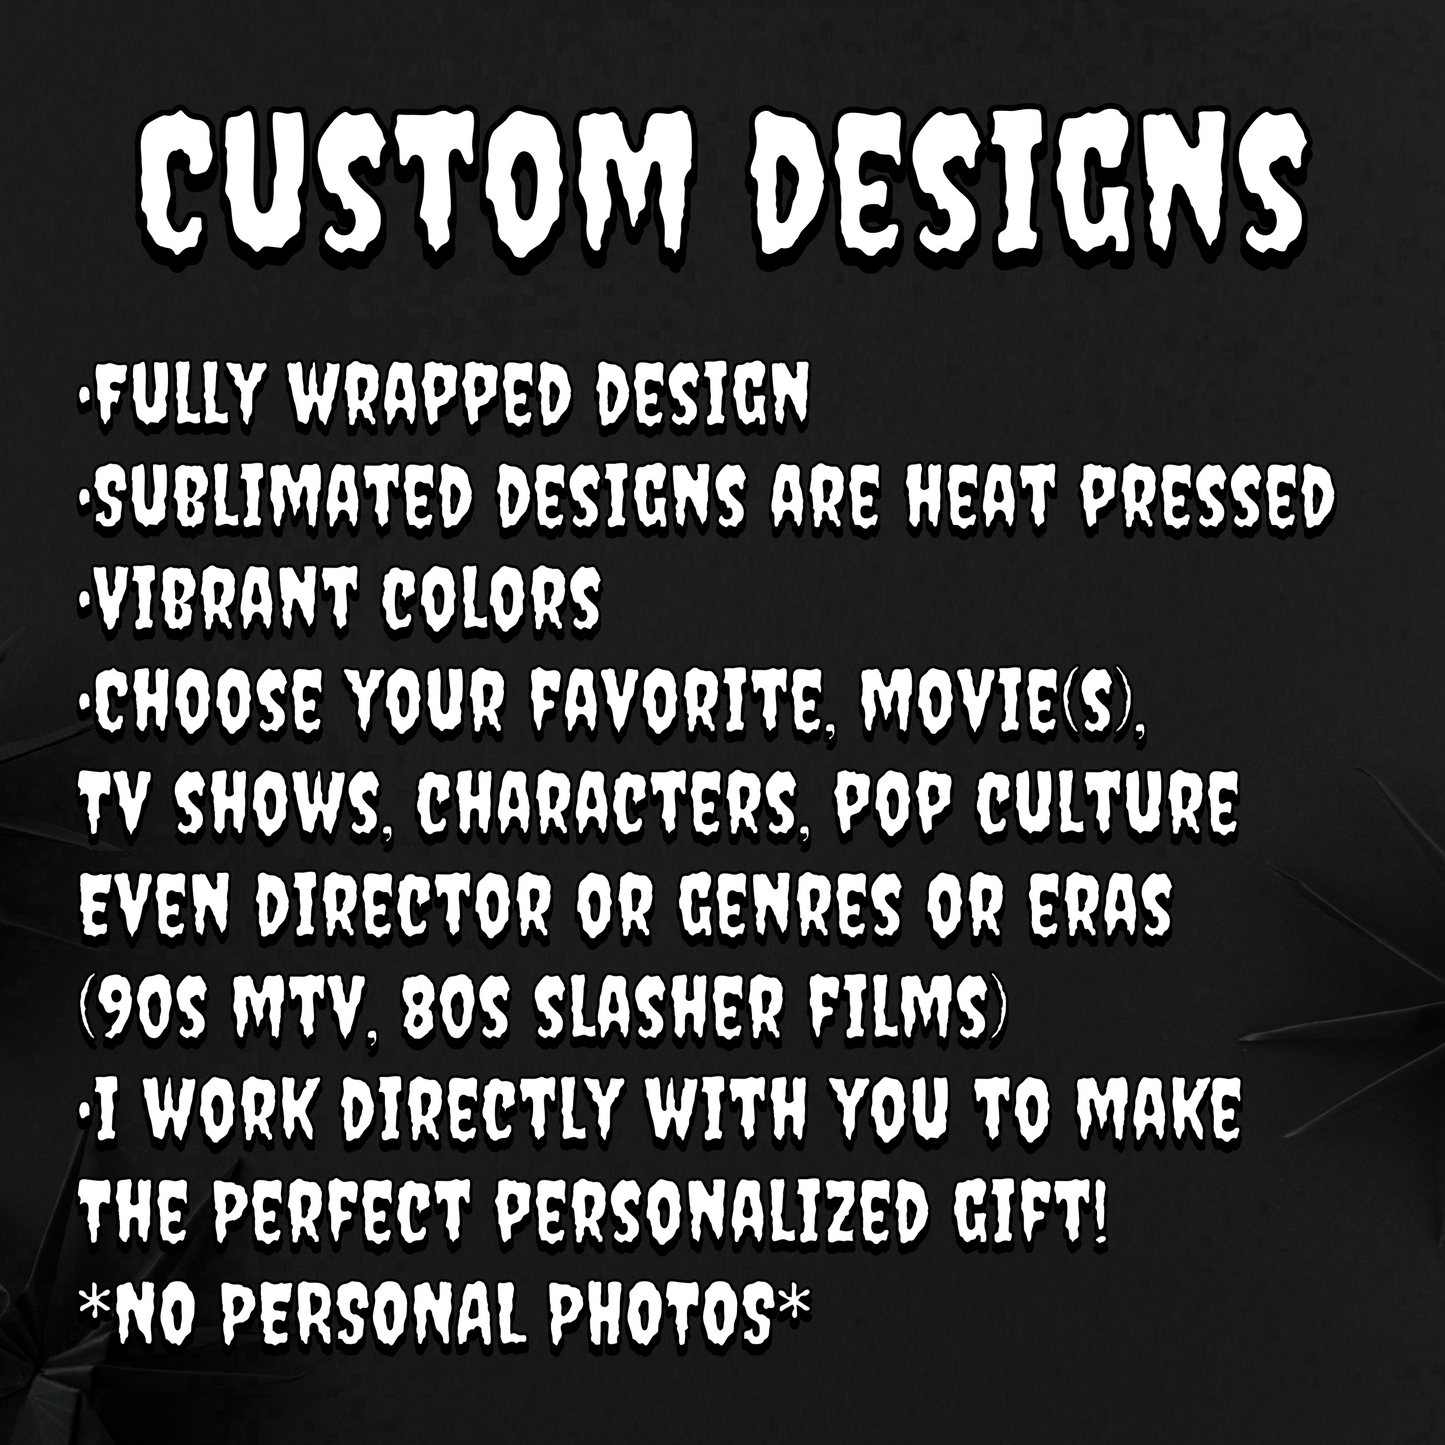 3.5" Custom Ceramic Coaster Set (4)